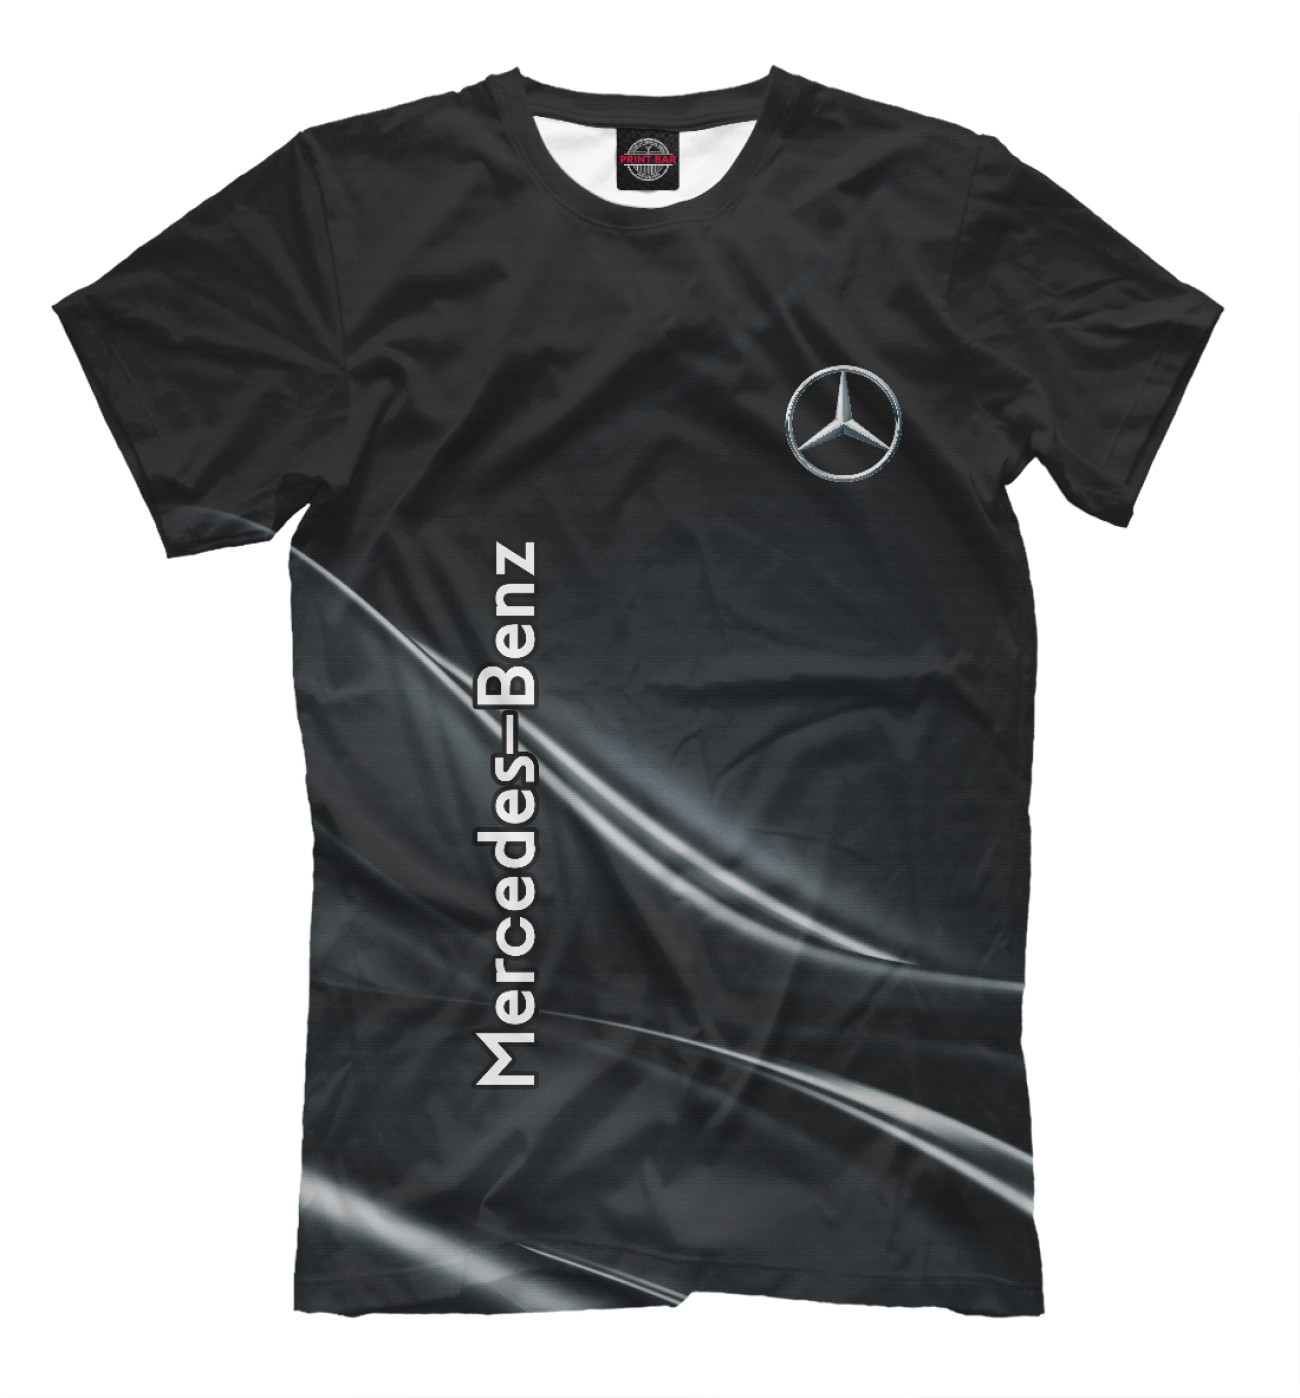 Мужская Футболка Mercedes-Benz, артикул: MER-718201-fut-2